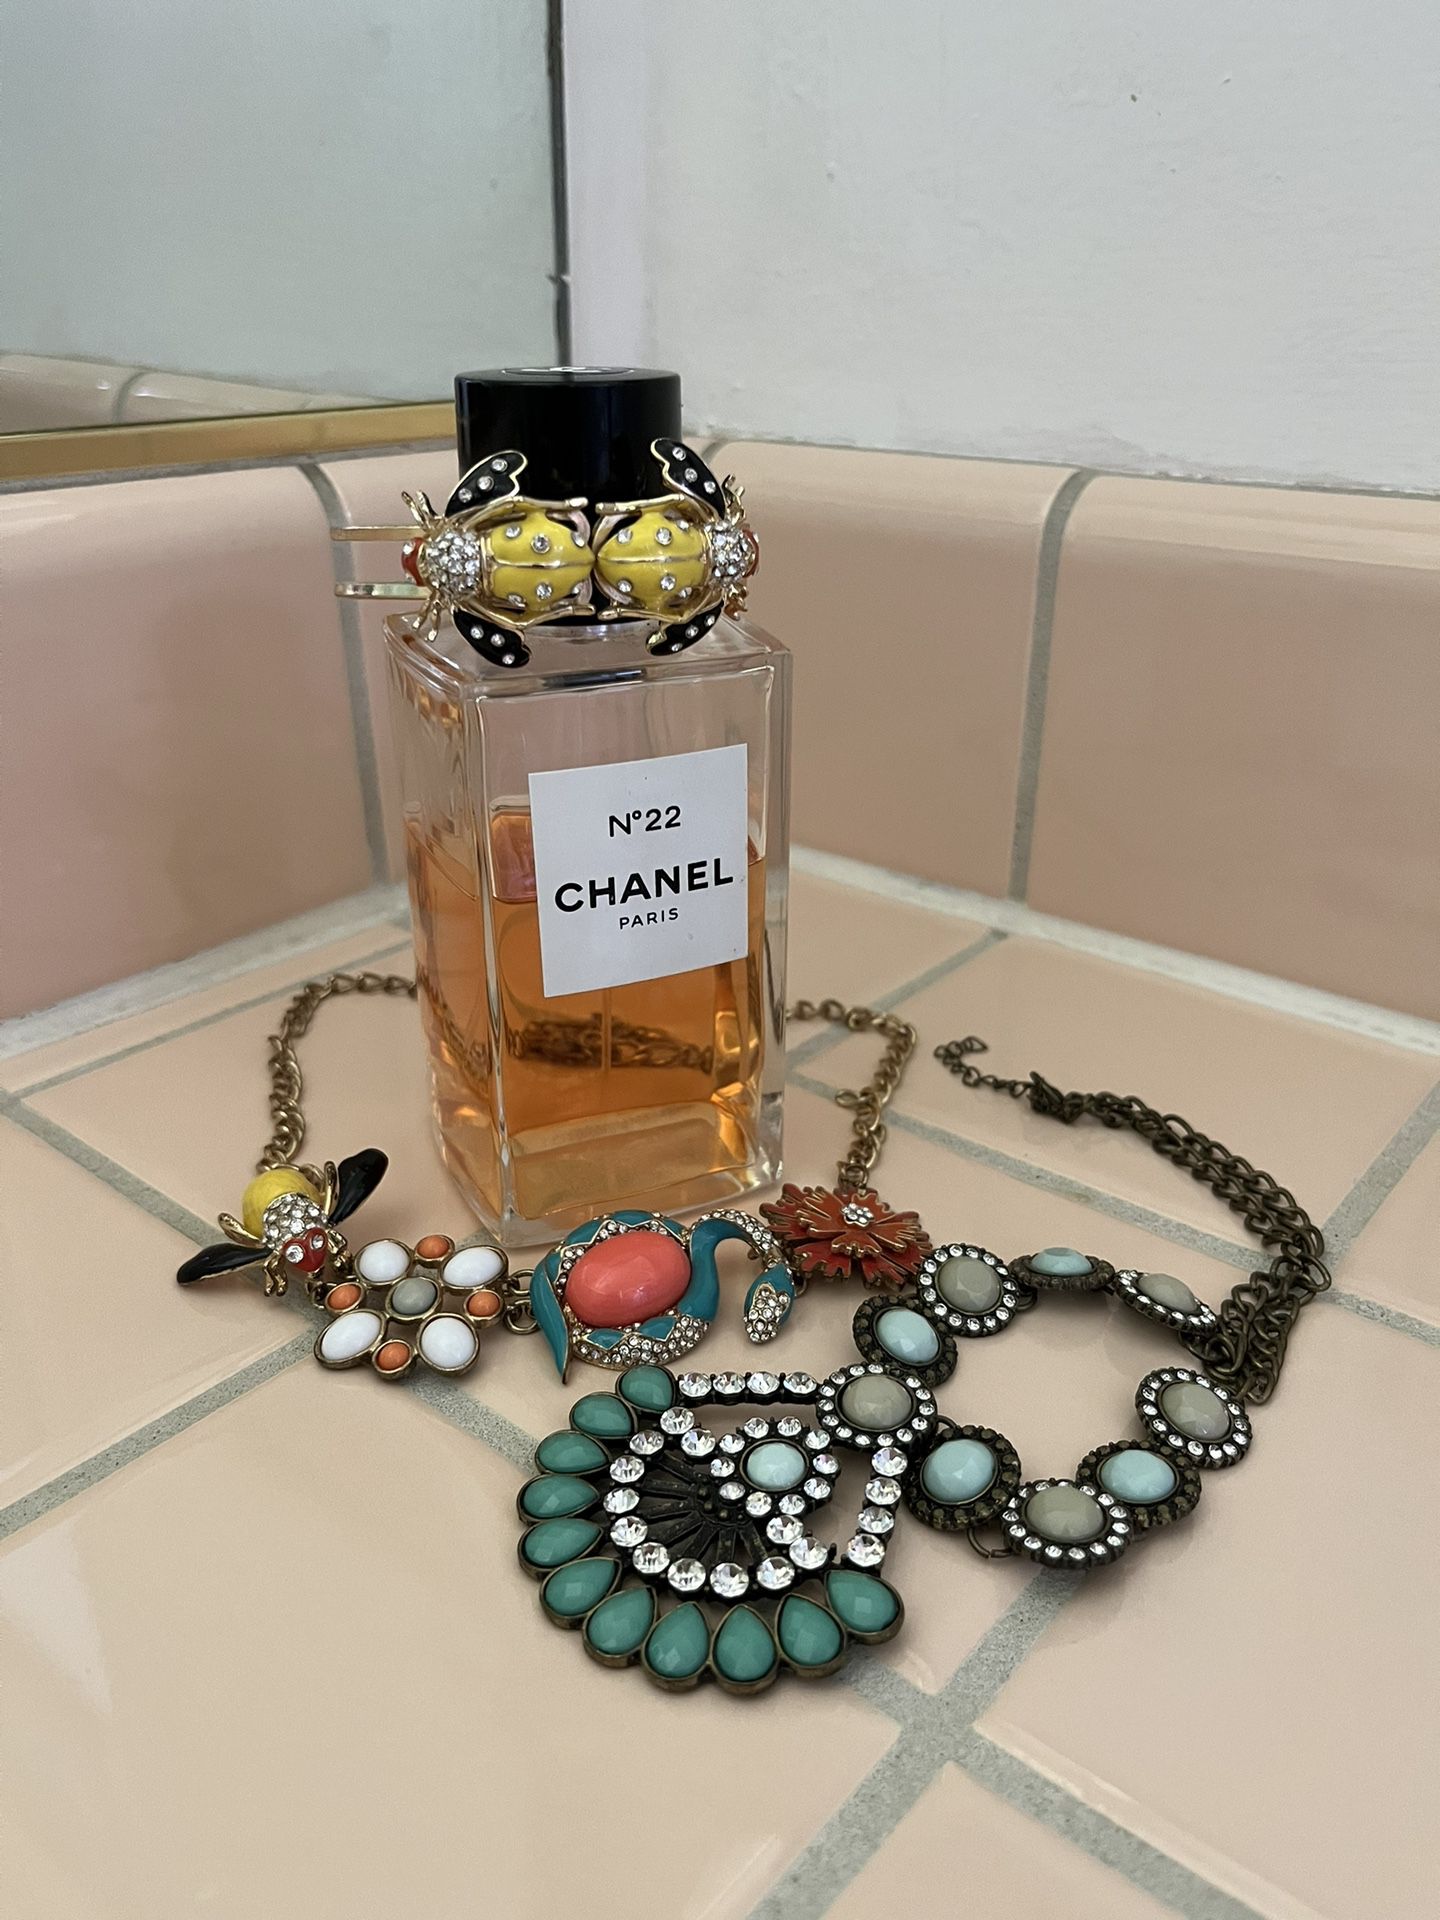 CHANEL Perfume + accessories 